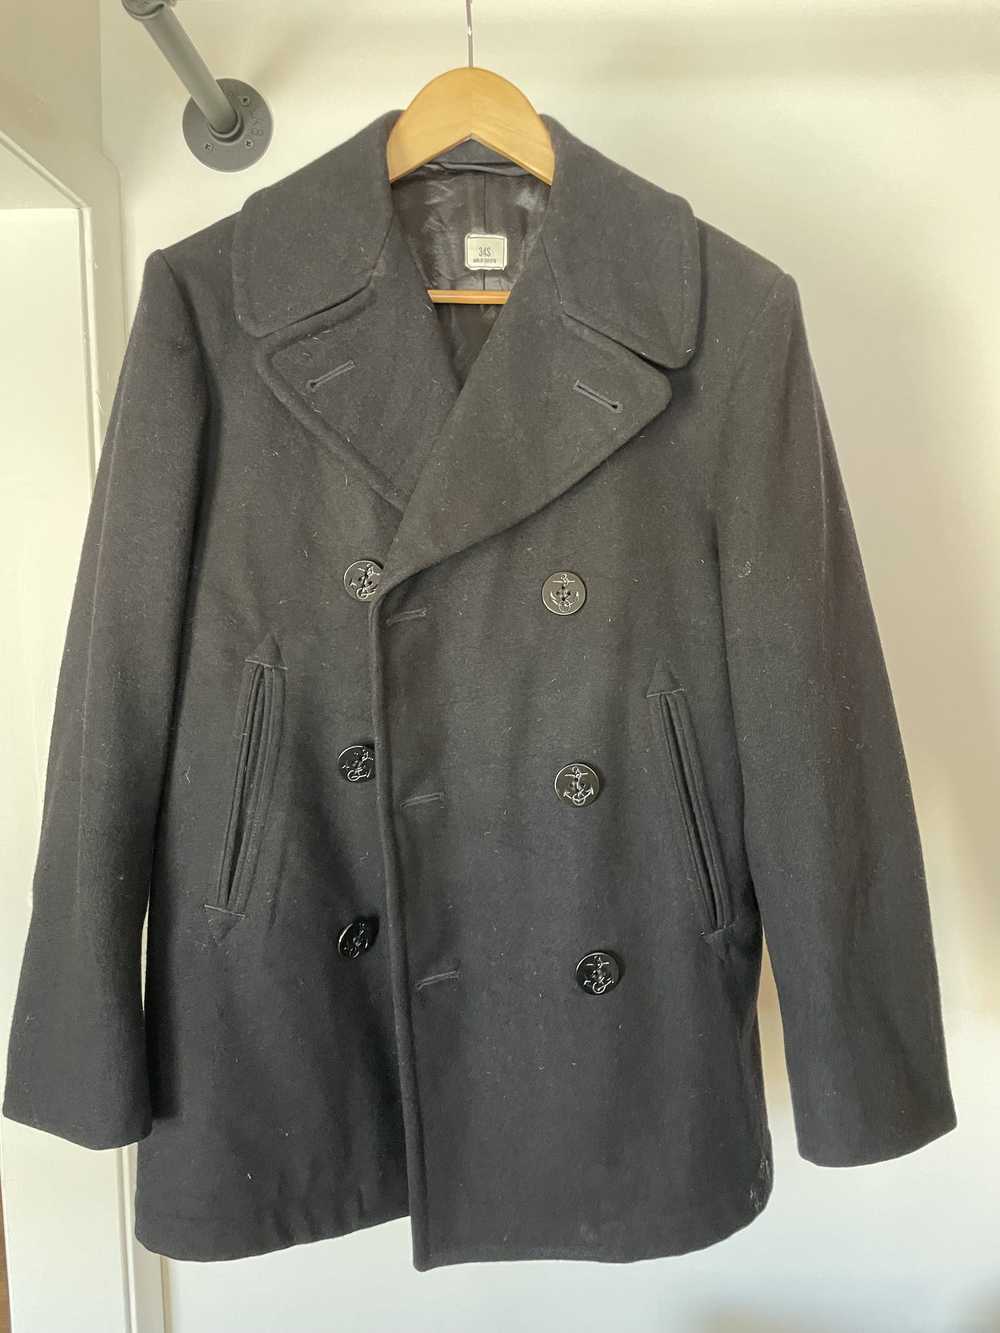 Vintage US Navy pea coat - image 1